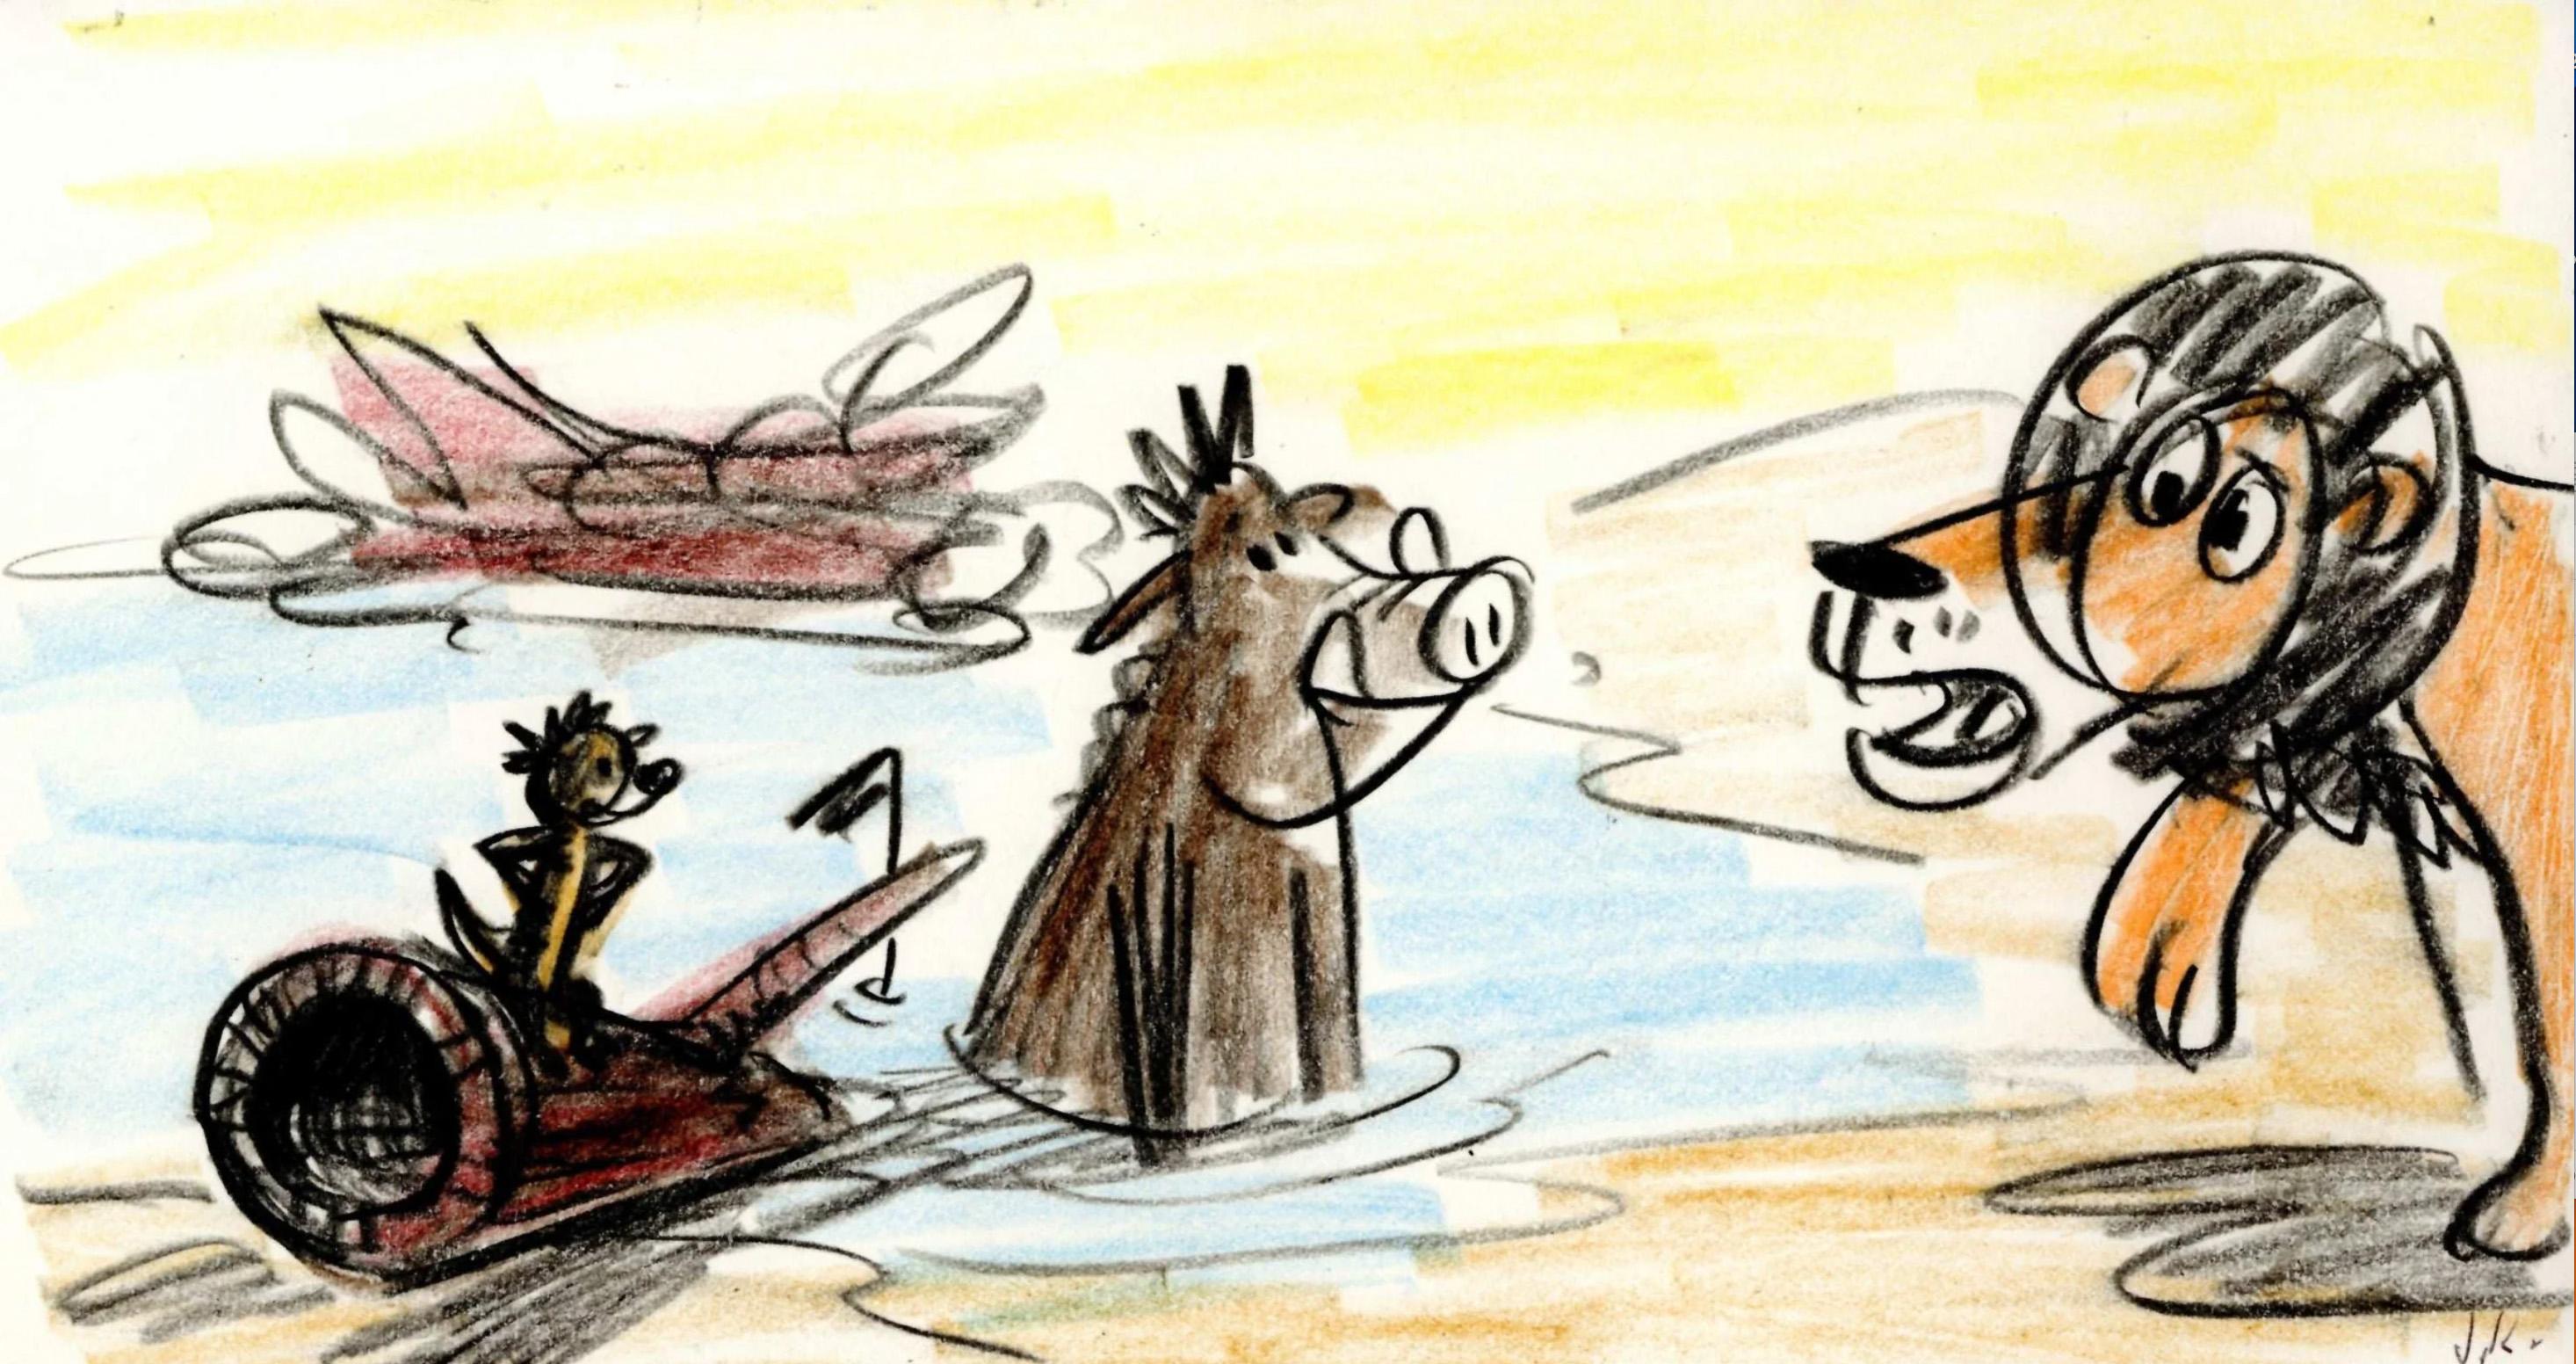 Lion King Storyboard: Timon, Pumba, and Scar - Art by Jorgen Klubien